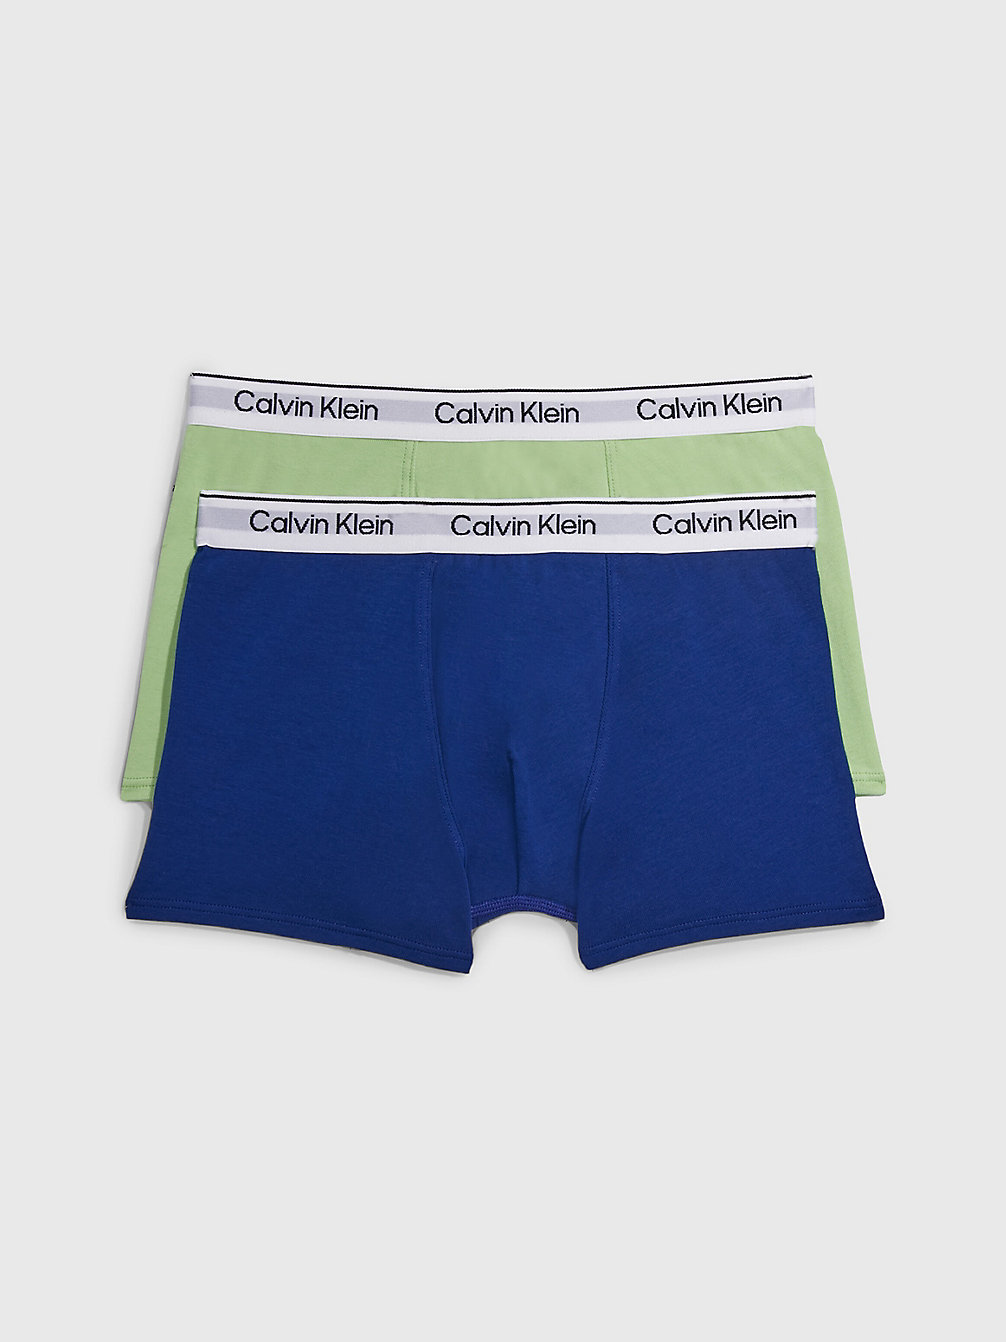 SPRINGFERN/BOLDBLUE 2 Pack Boys Trunks - Modern Cotton undefined boys Calvin Klein